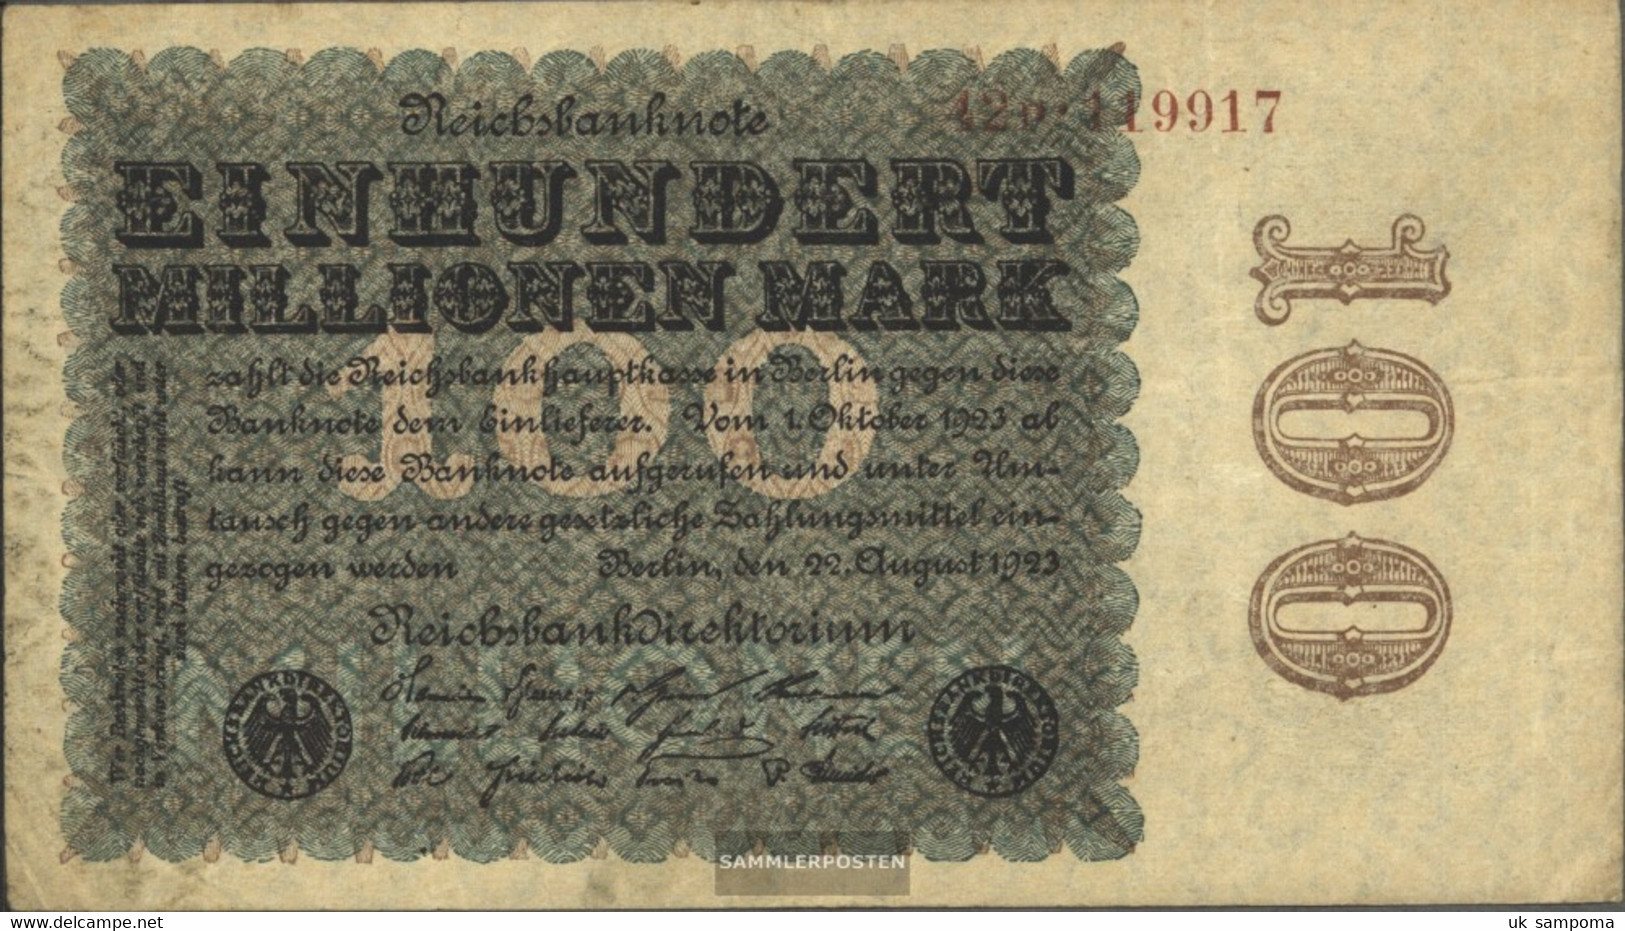 German Empire Rosenbg: 106e, Watermark Cabbage 6stellige KN Brown Used (III) 1923 100 Million Mark - 100 Miljoen Mark